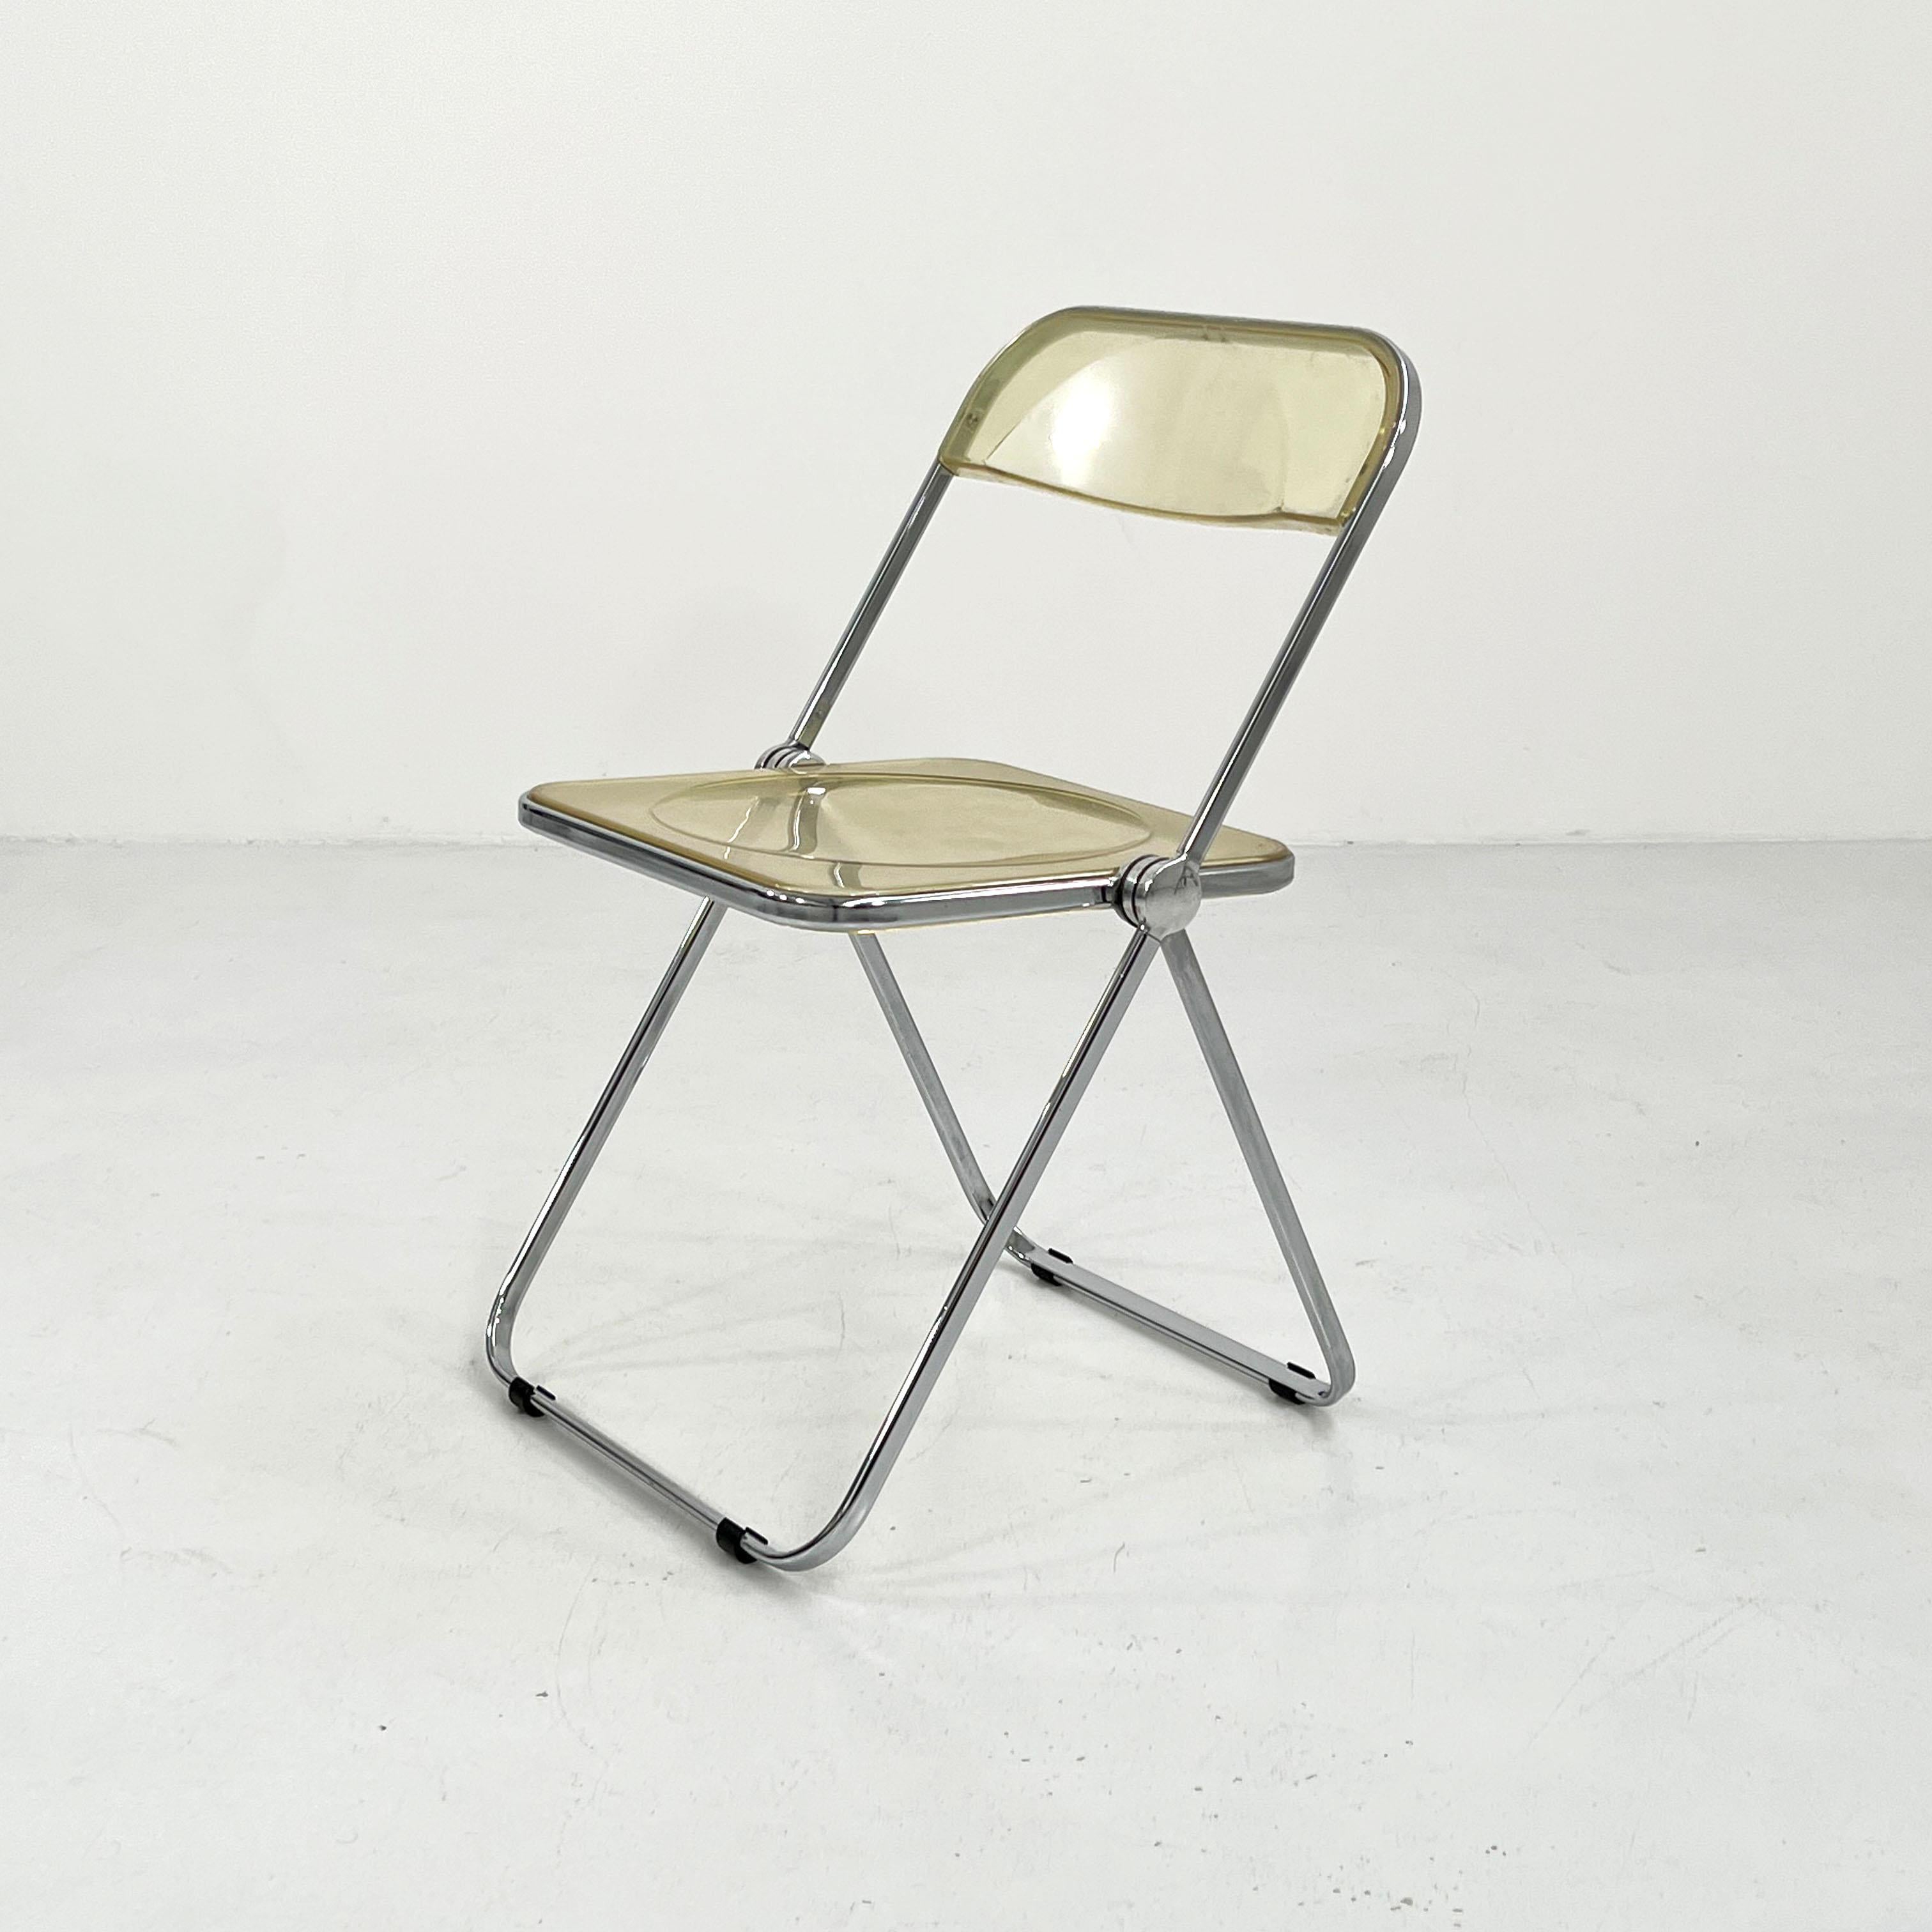 Plia folding chair by Giancarlo Piretti for Anonima Castelli, 1960s

Designer- Giancarlo Piretti
Producer- Anonima Castelli
Model- Plia Chair
Design Period- Sixties
Measurements- Width 46 cm x Depth 50 cm x Height 75 cm x Seat Height 44